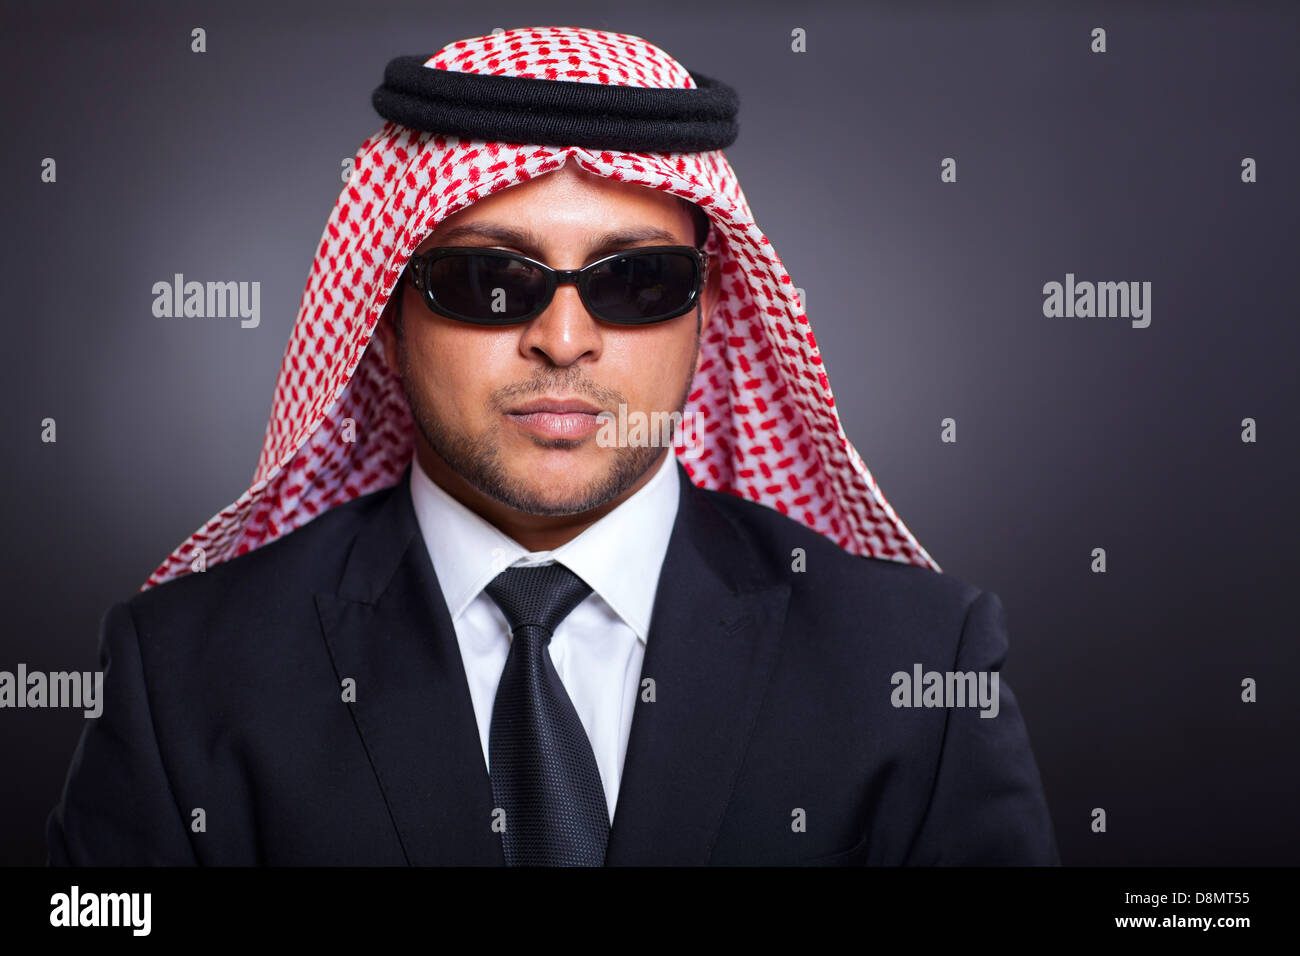 wealthy arabian businessman wearing sunglasses on black background Stock Photo